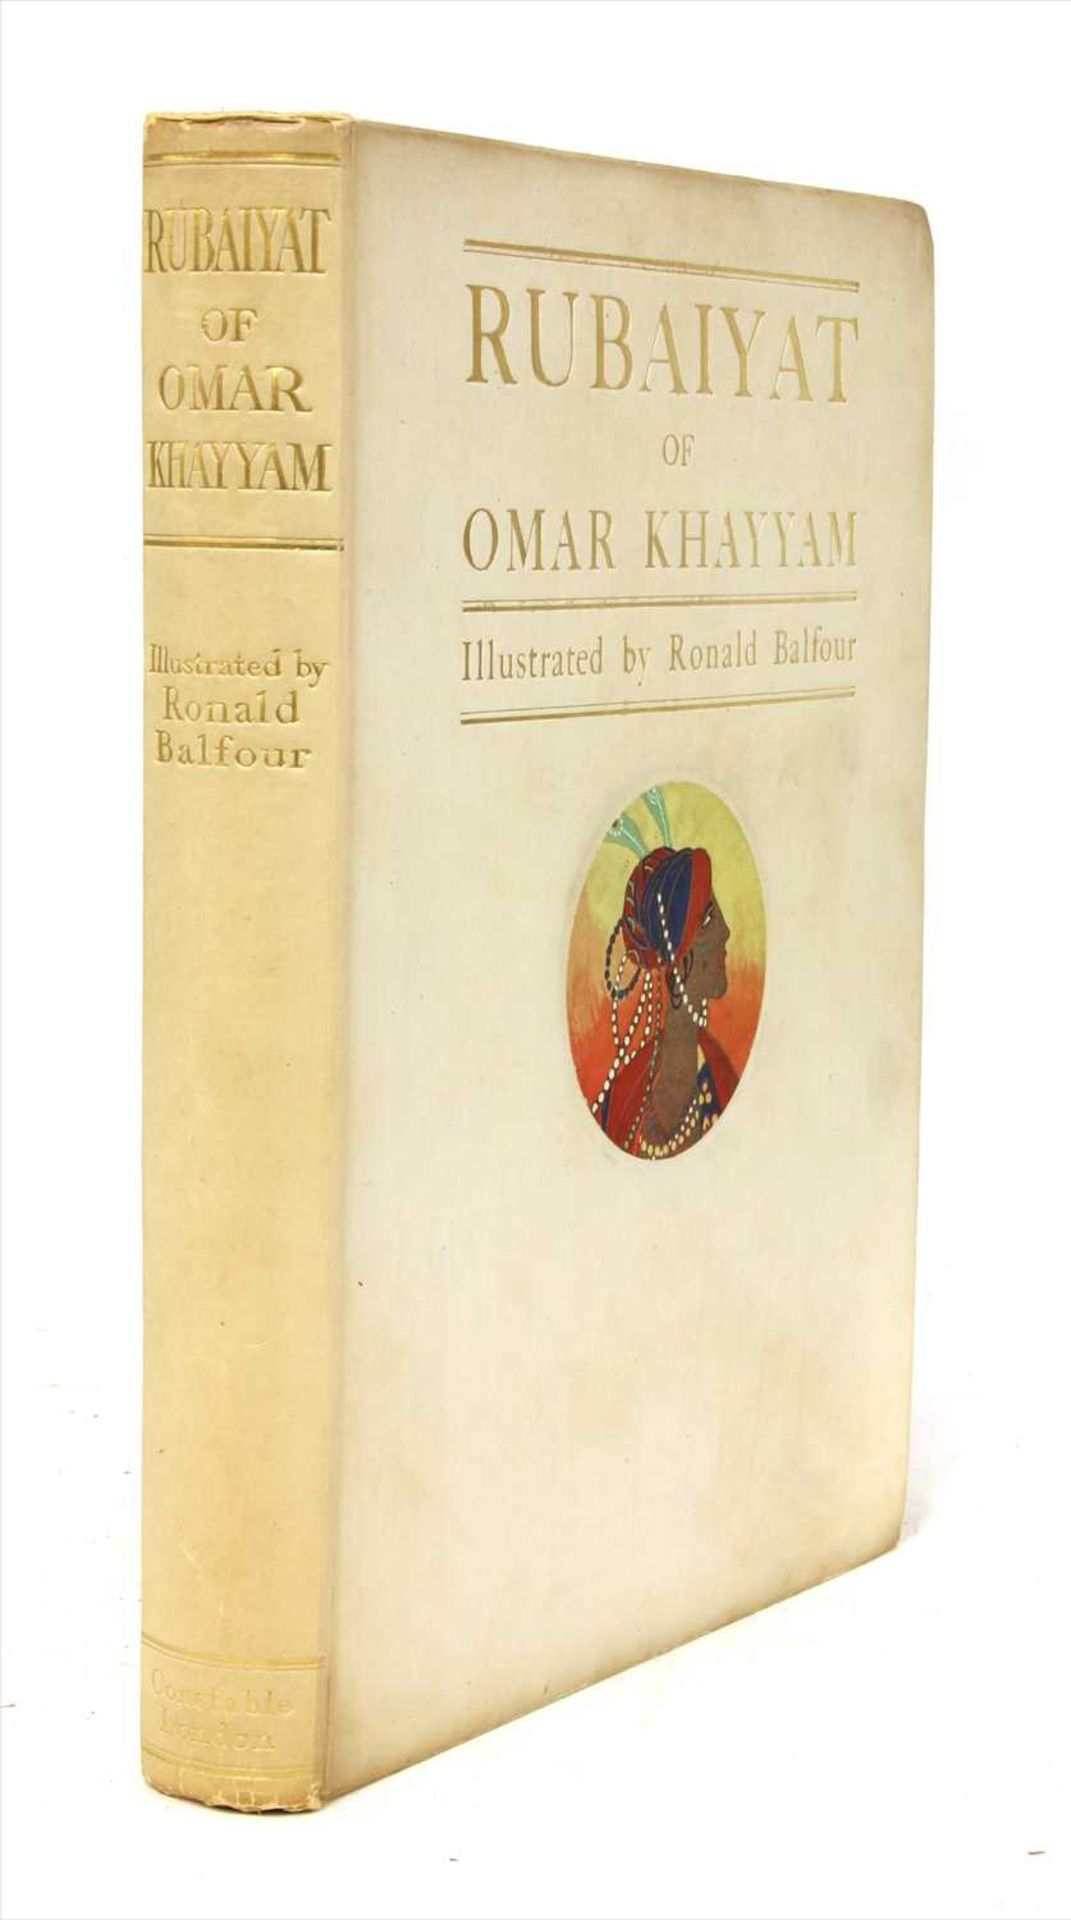 BALFOUR, Ronald (ill): Rubaiyat of Omar Khayyam.